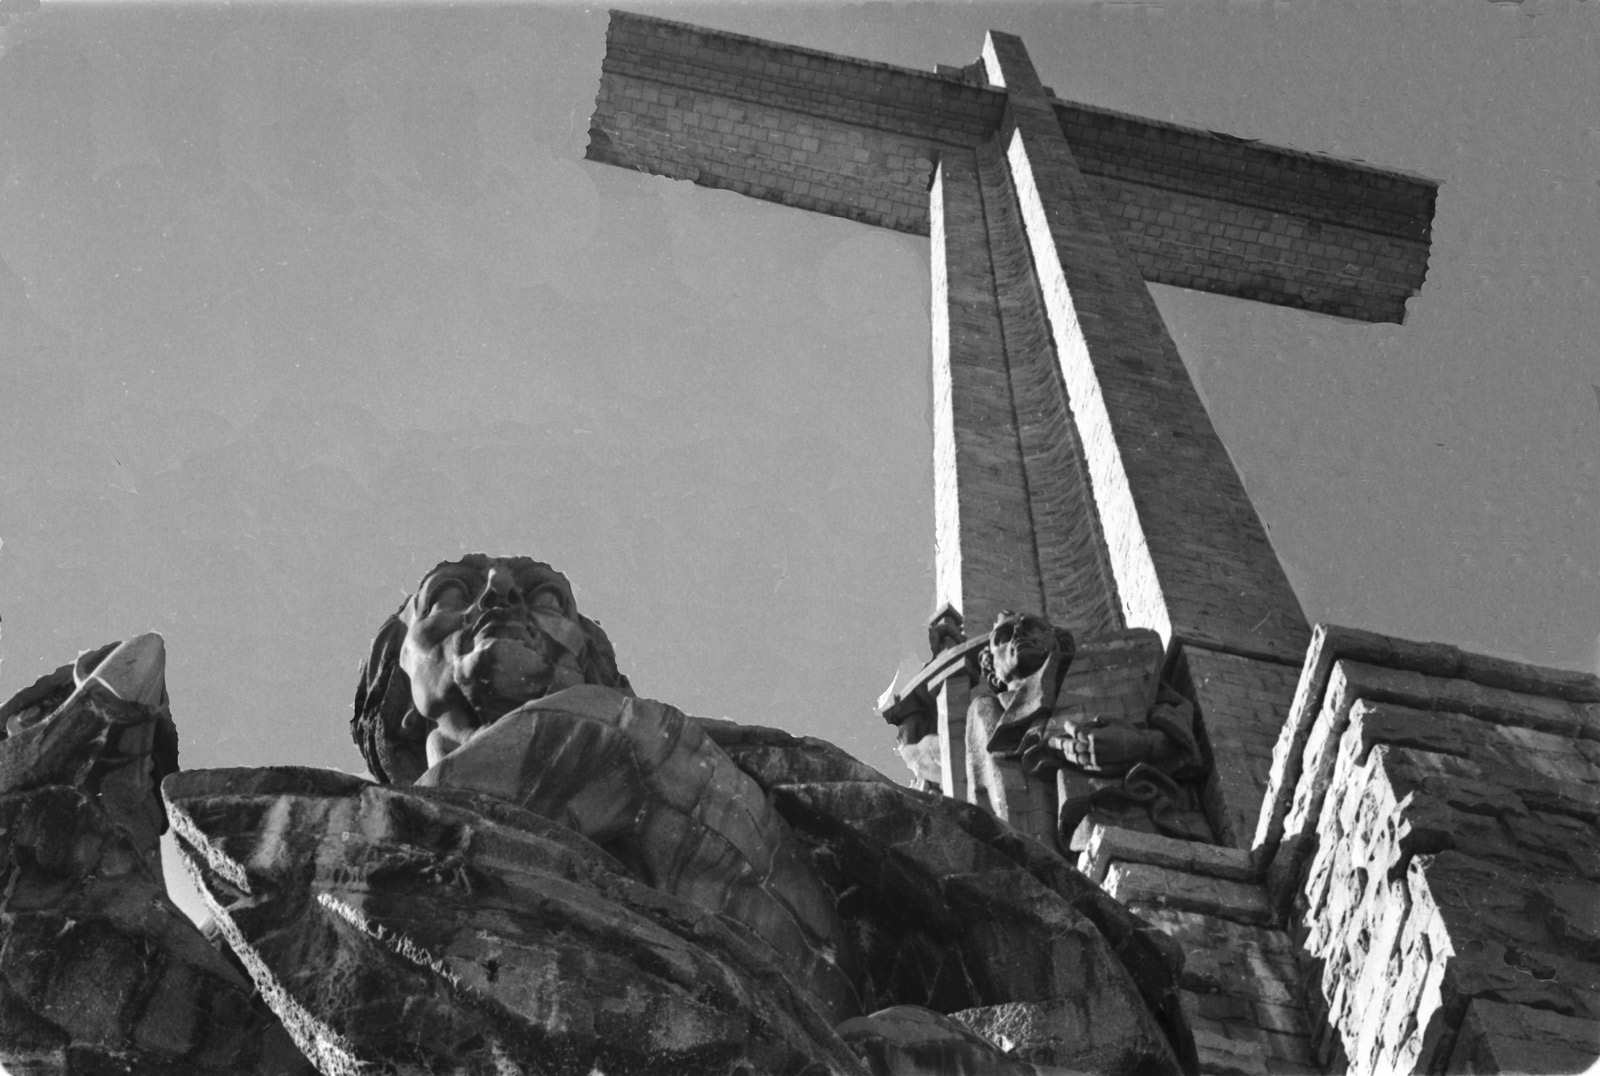 El Valle de los Caídos, the war memorial and mausoleum of General Franco built, in part, by Republican prisoners in the mountains near Madrid, Spain, 1976